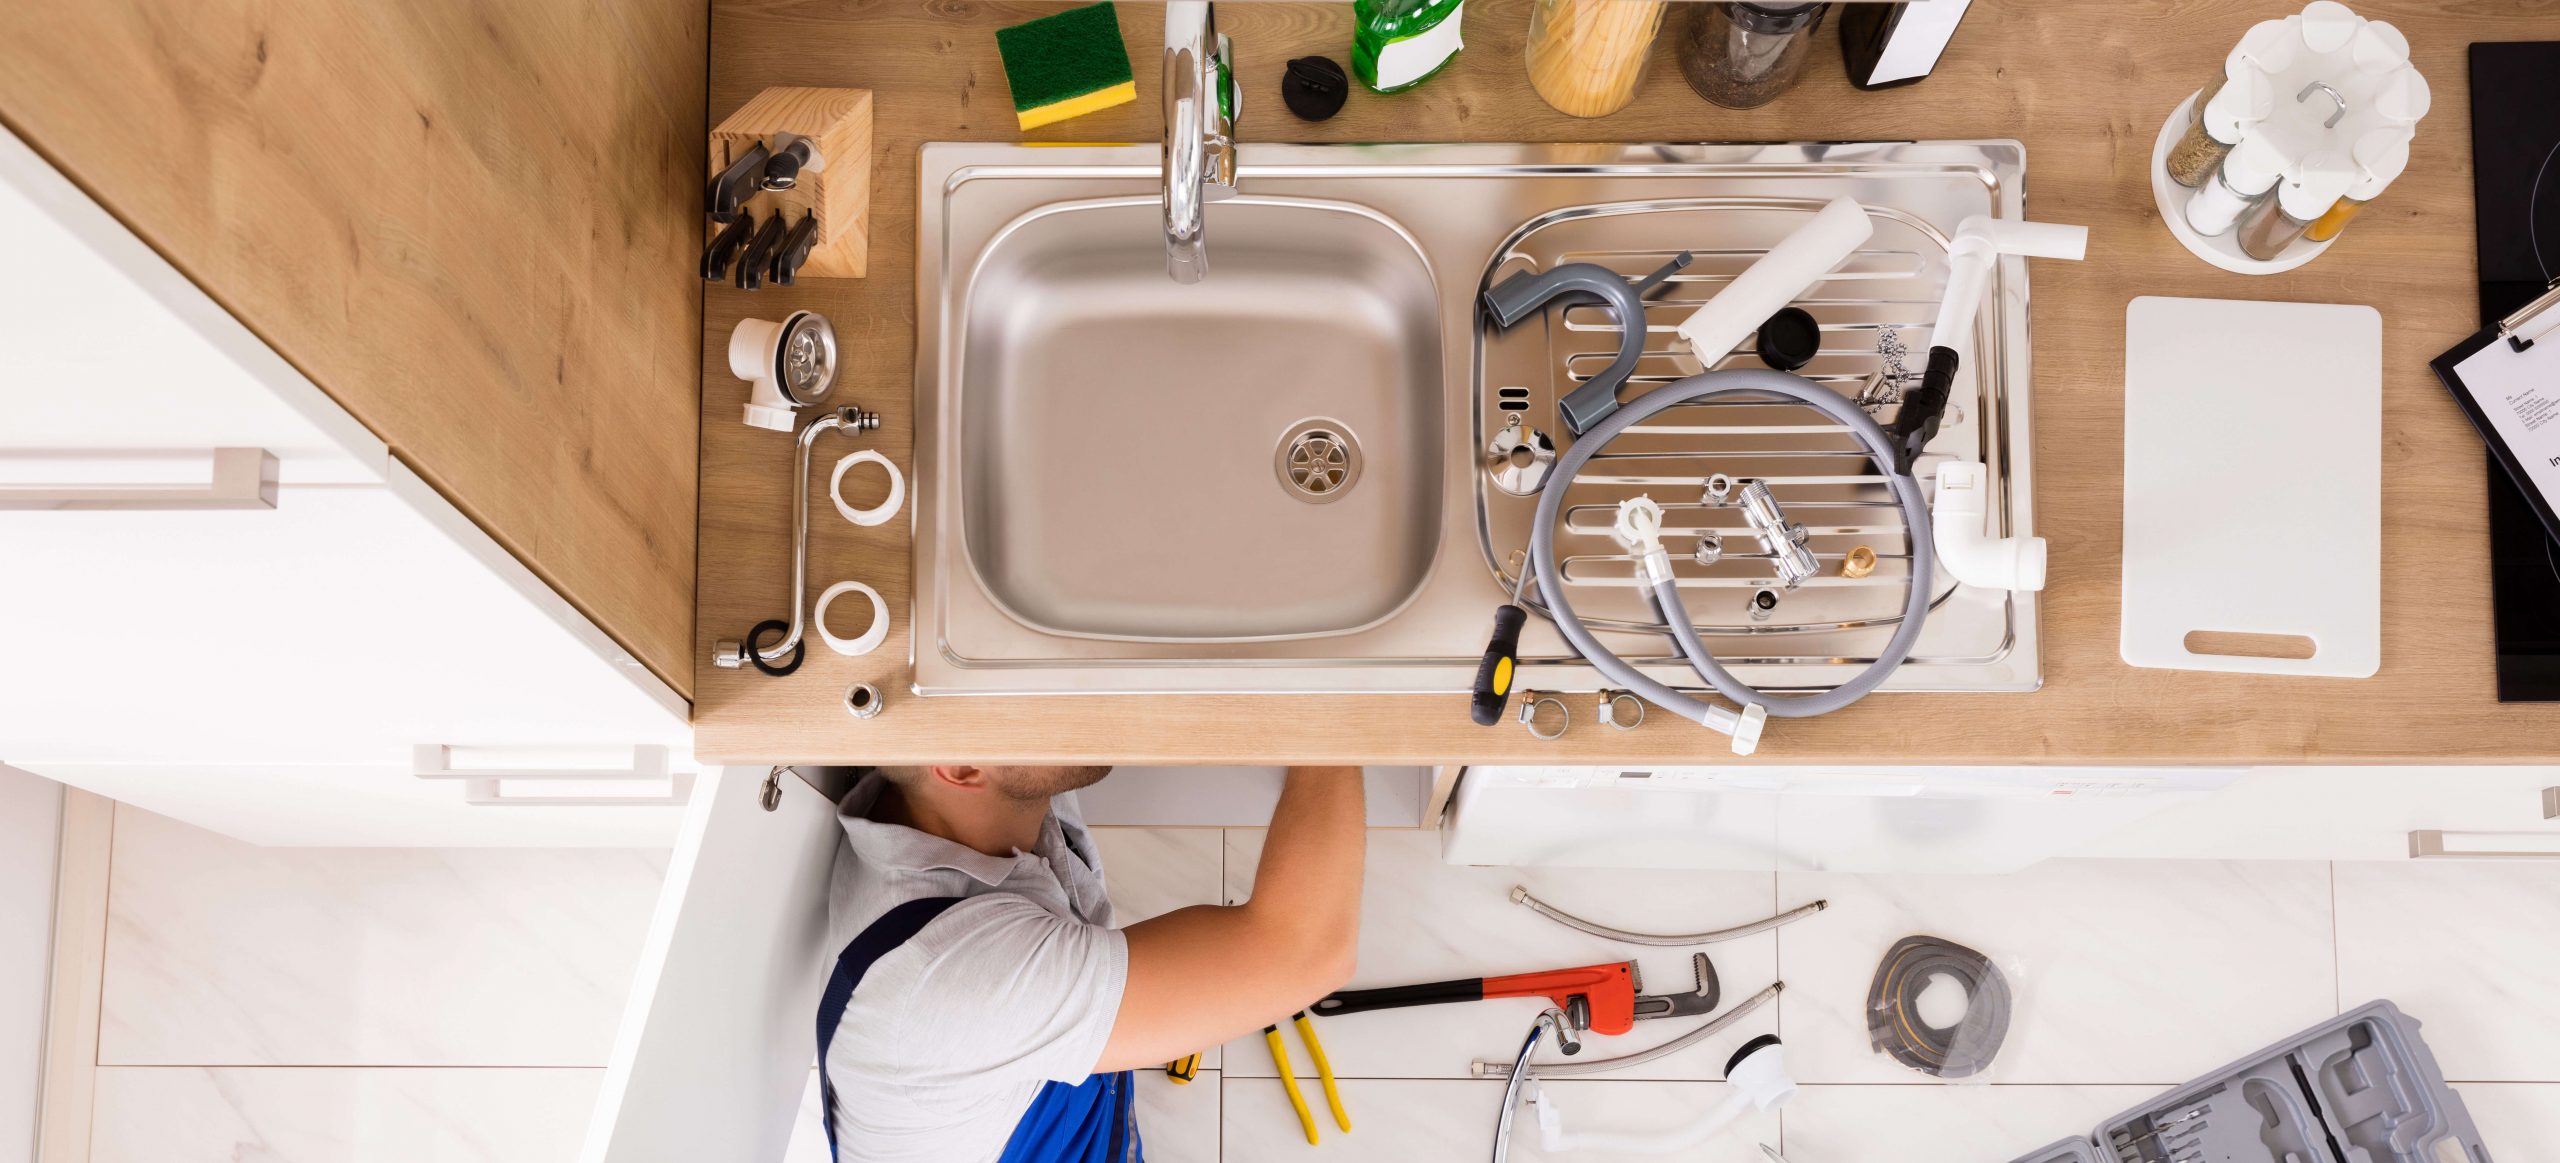 Preparation for Installing a Kitchen Sink Strainer